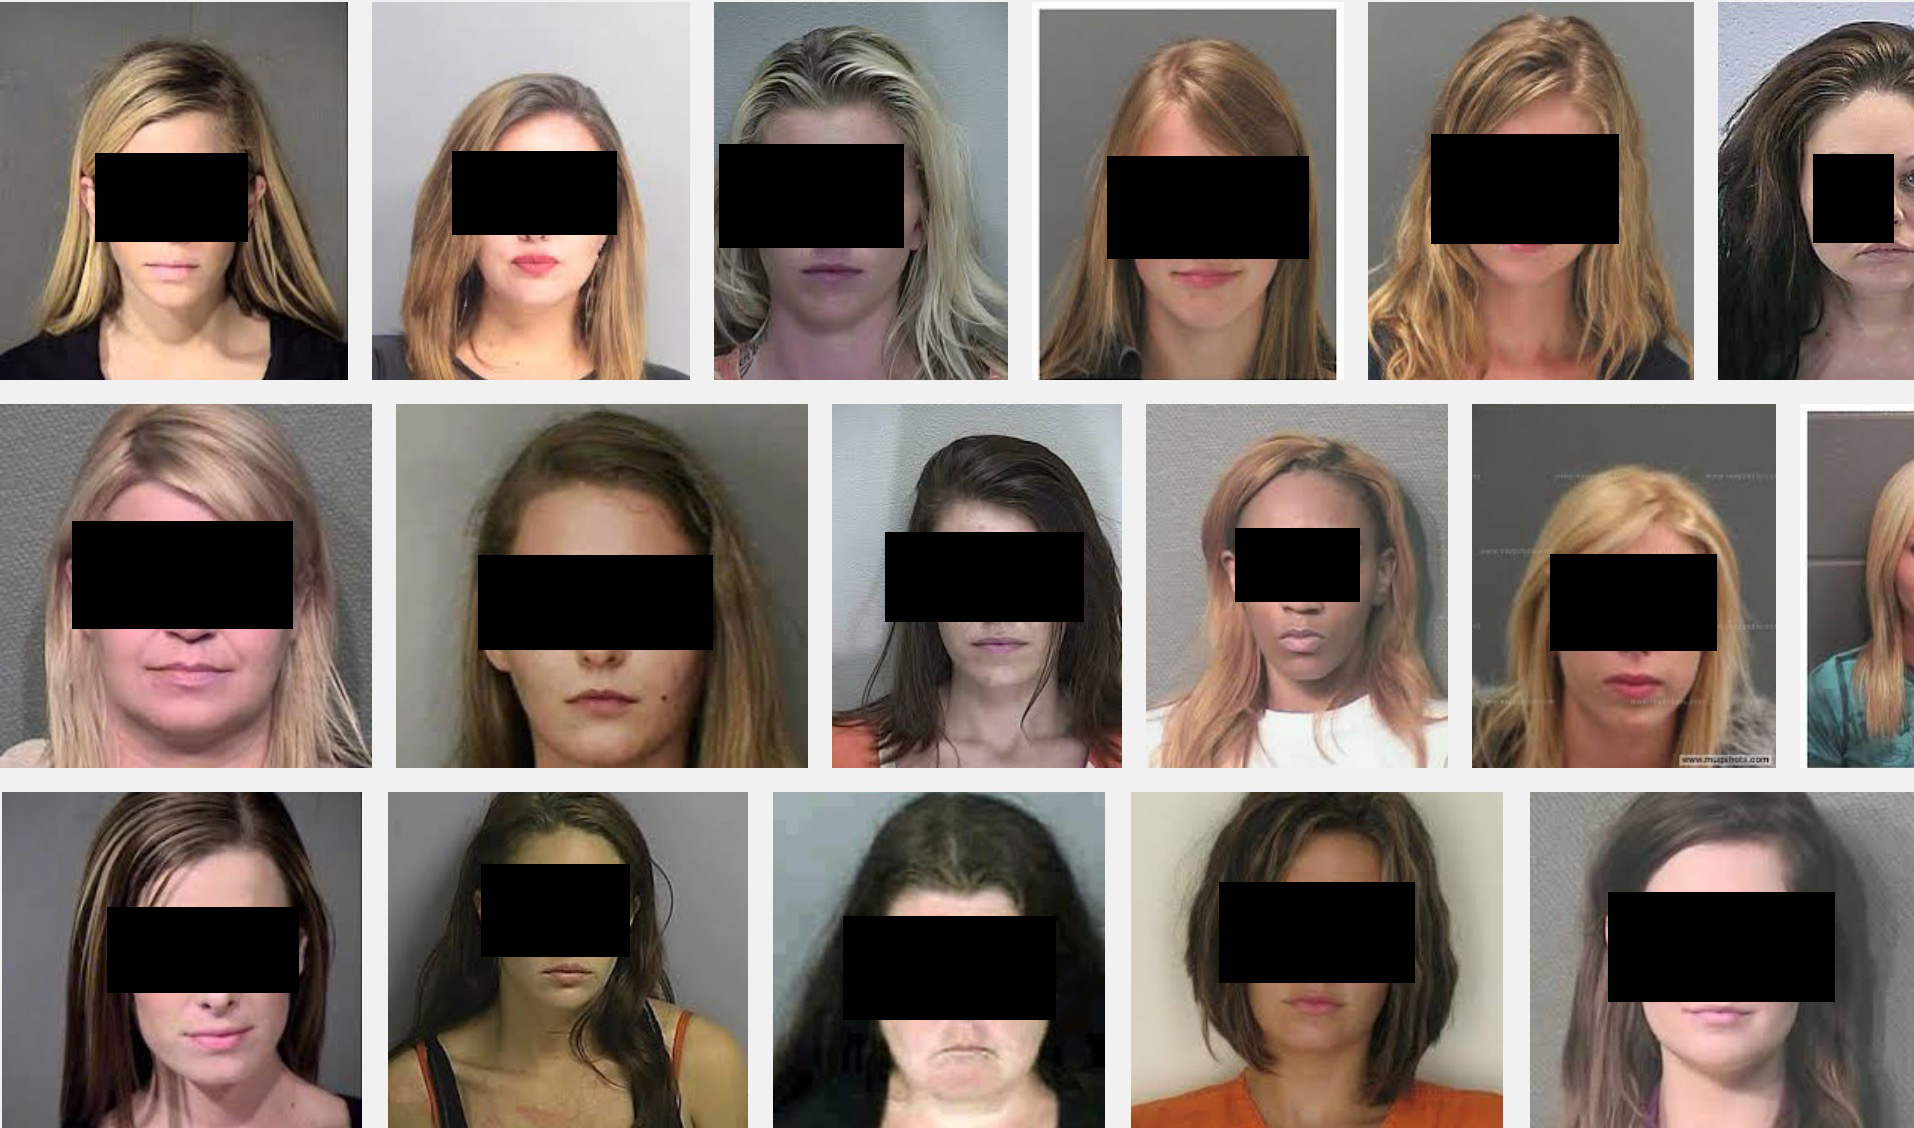 Alabama law bans publication of prostitution mugshots